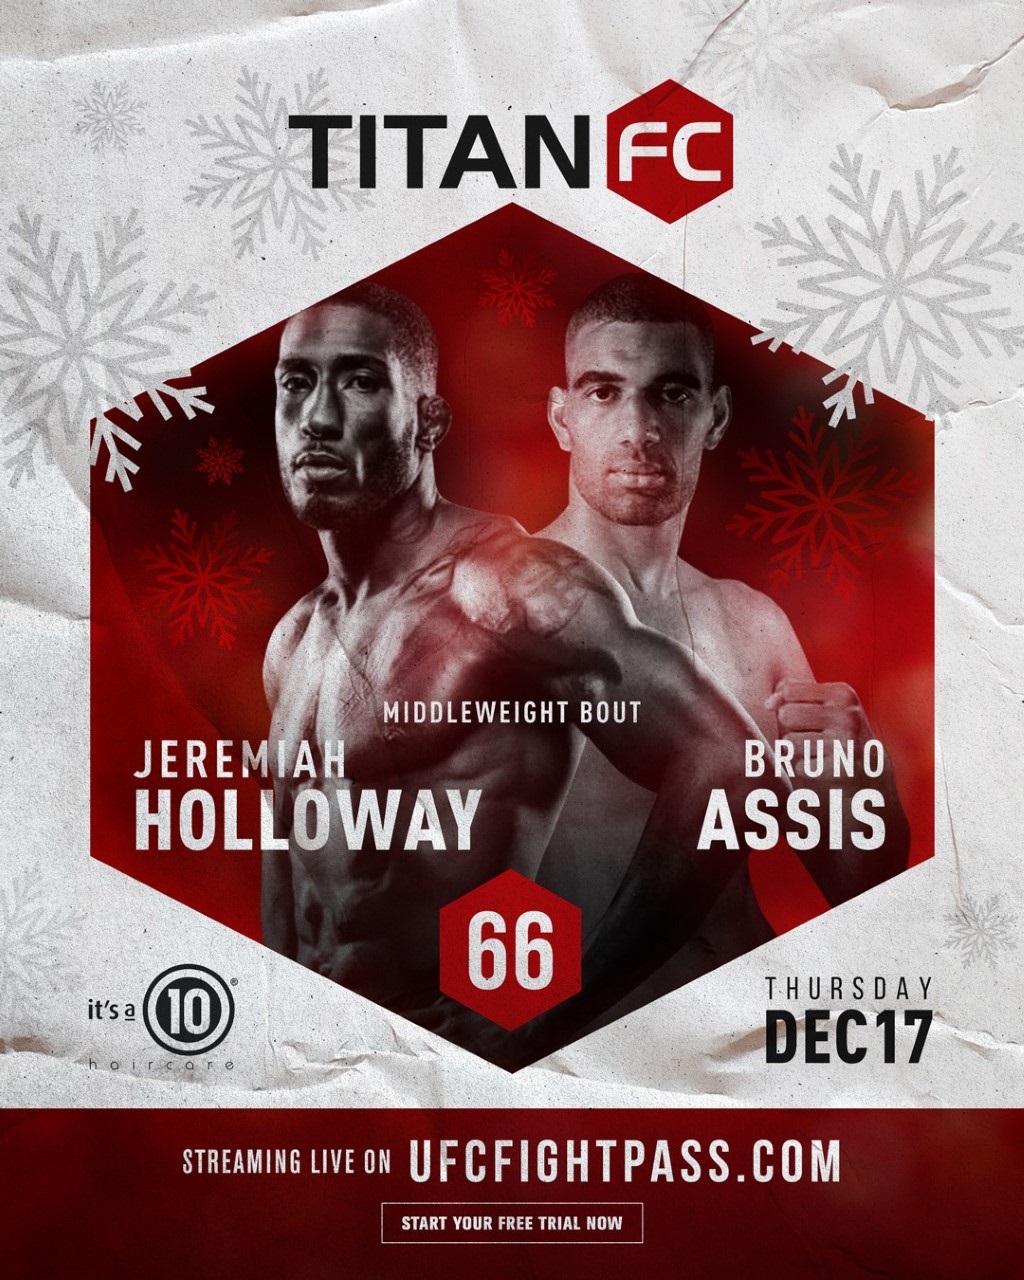 Titan FC 66 results - Assis vs. Holloway